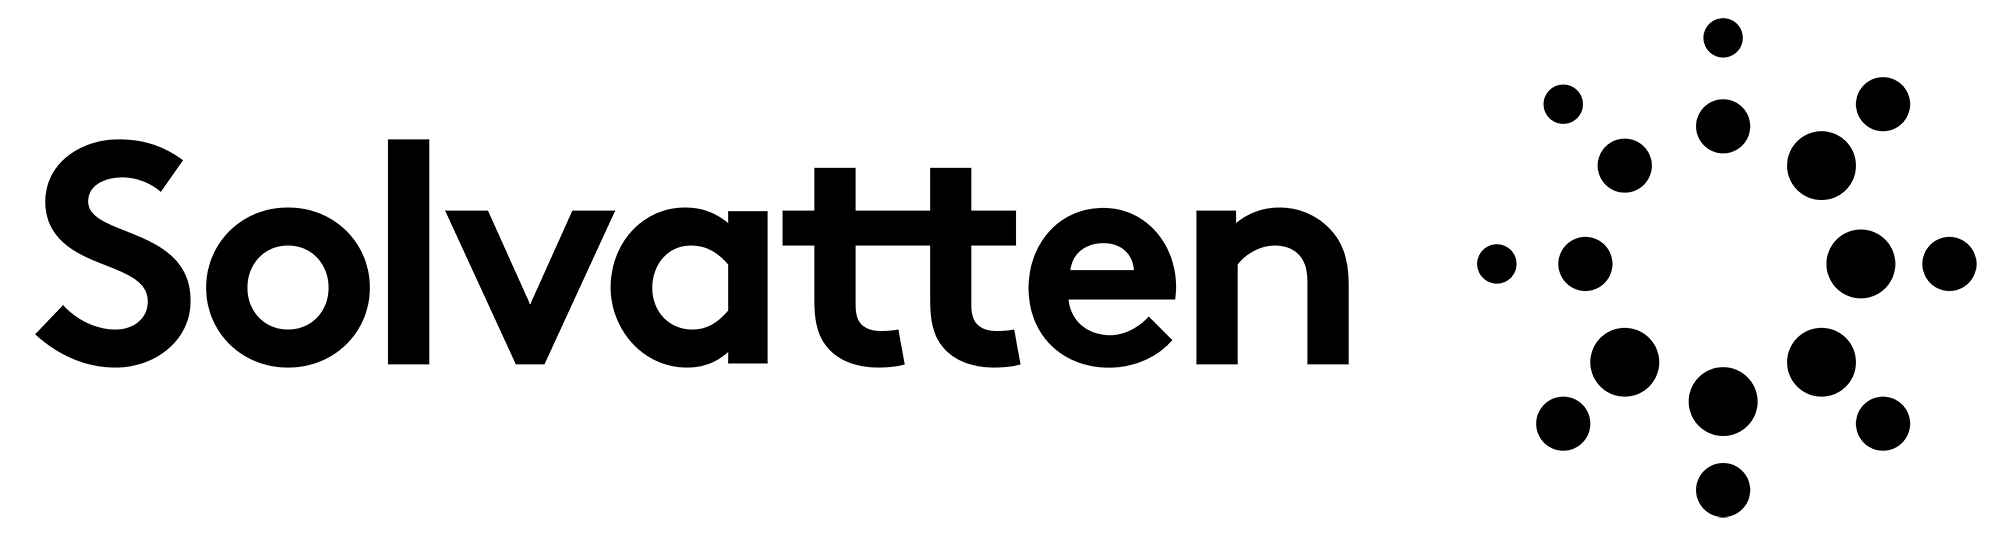 Solvatten.org logo